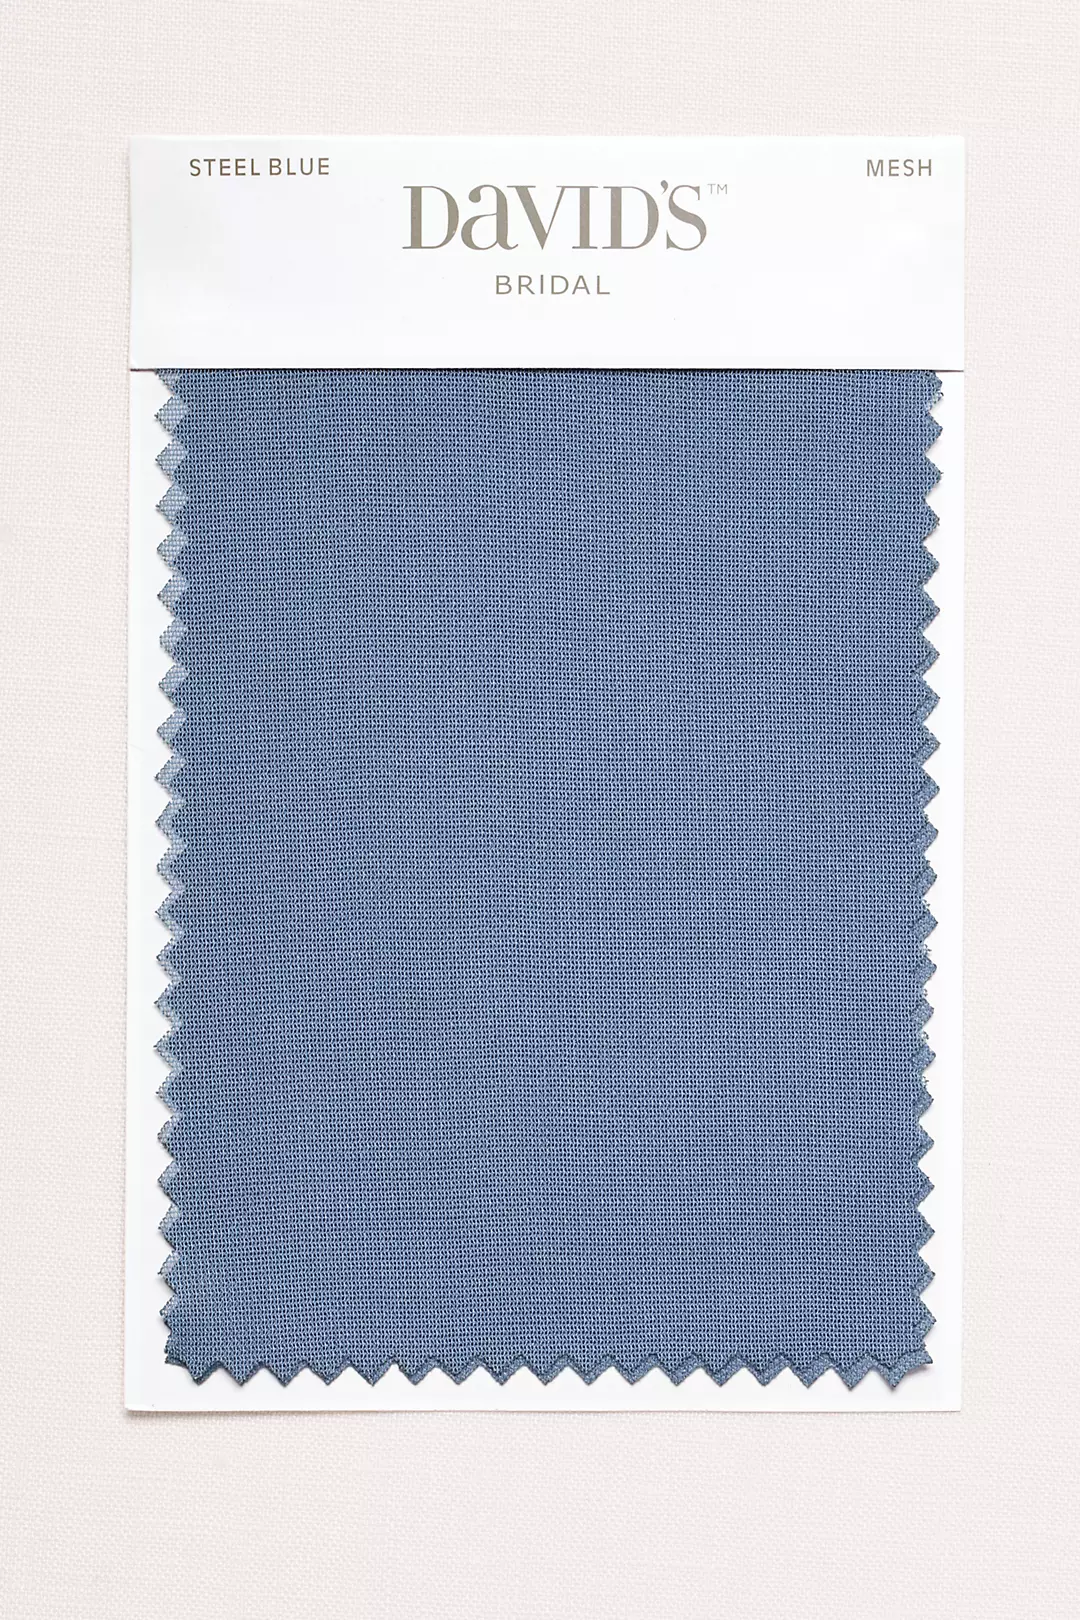 Steel Blue Fabric Swatch Image